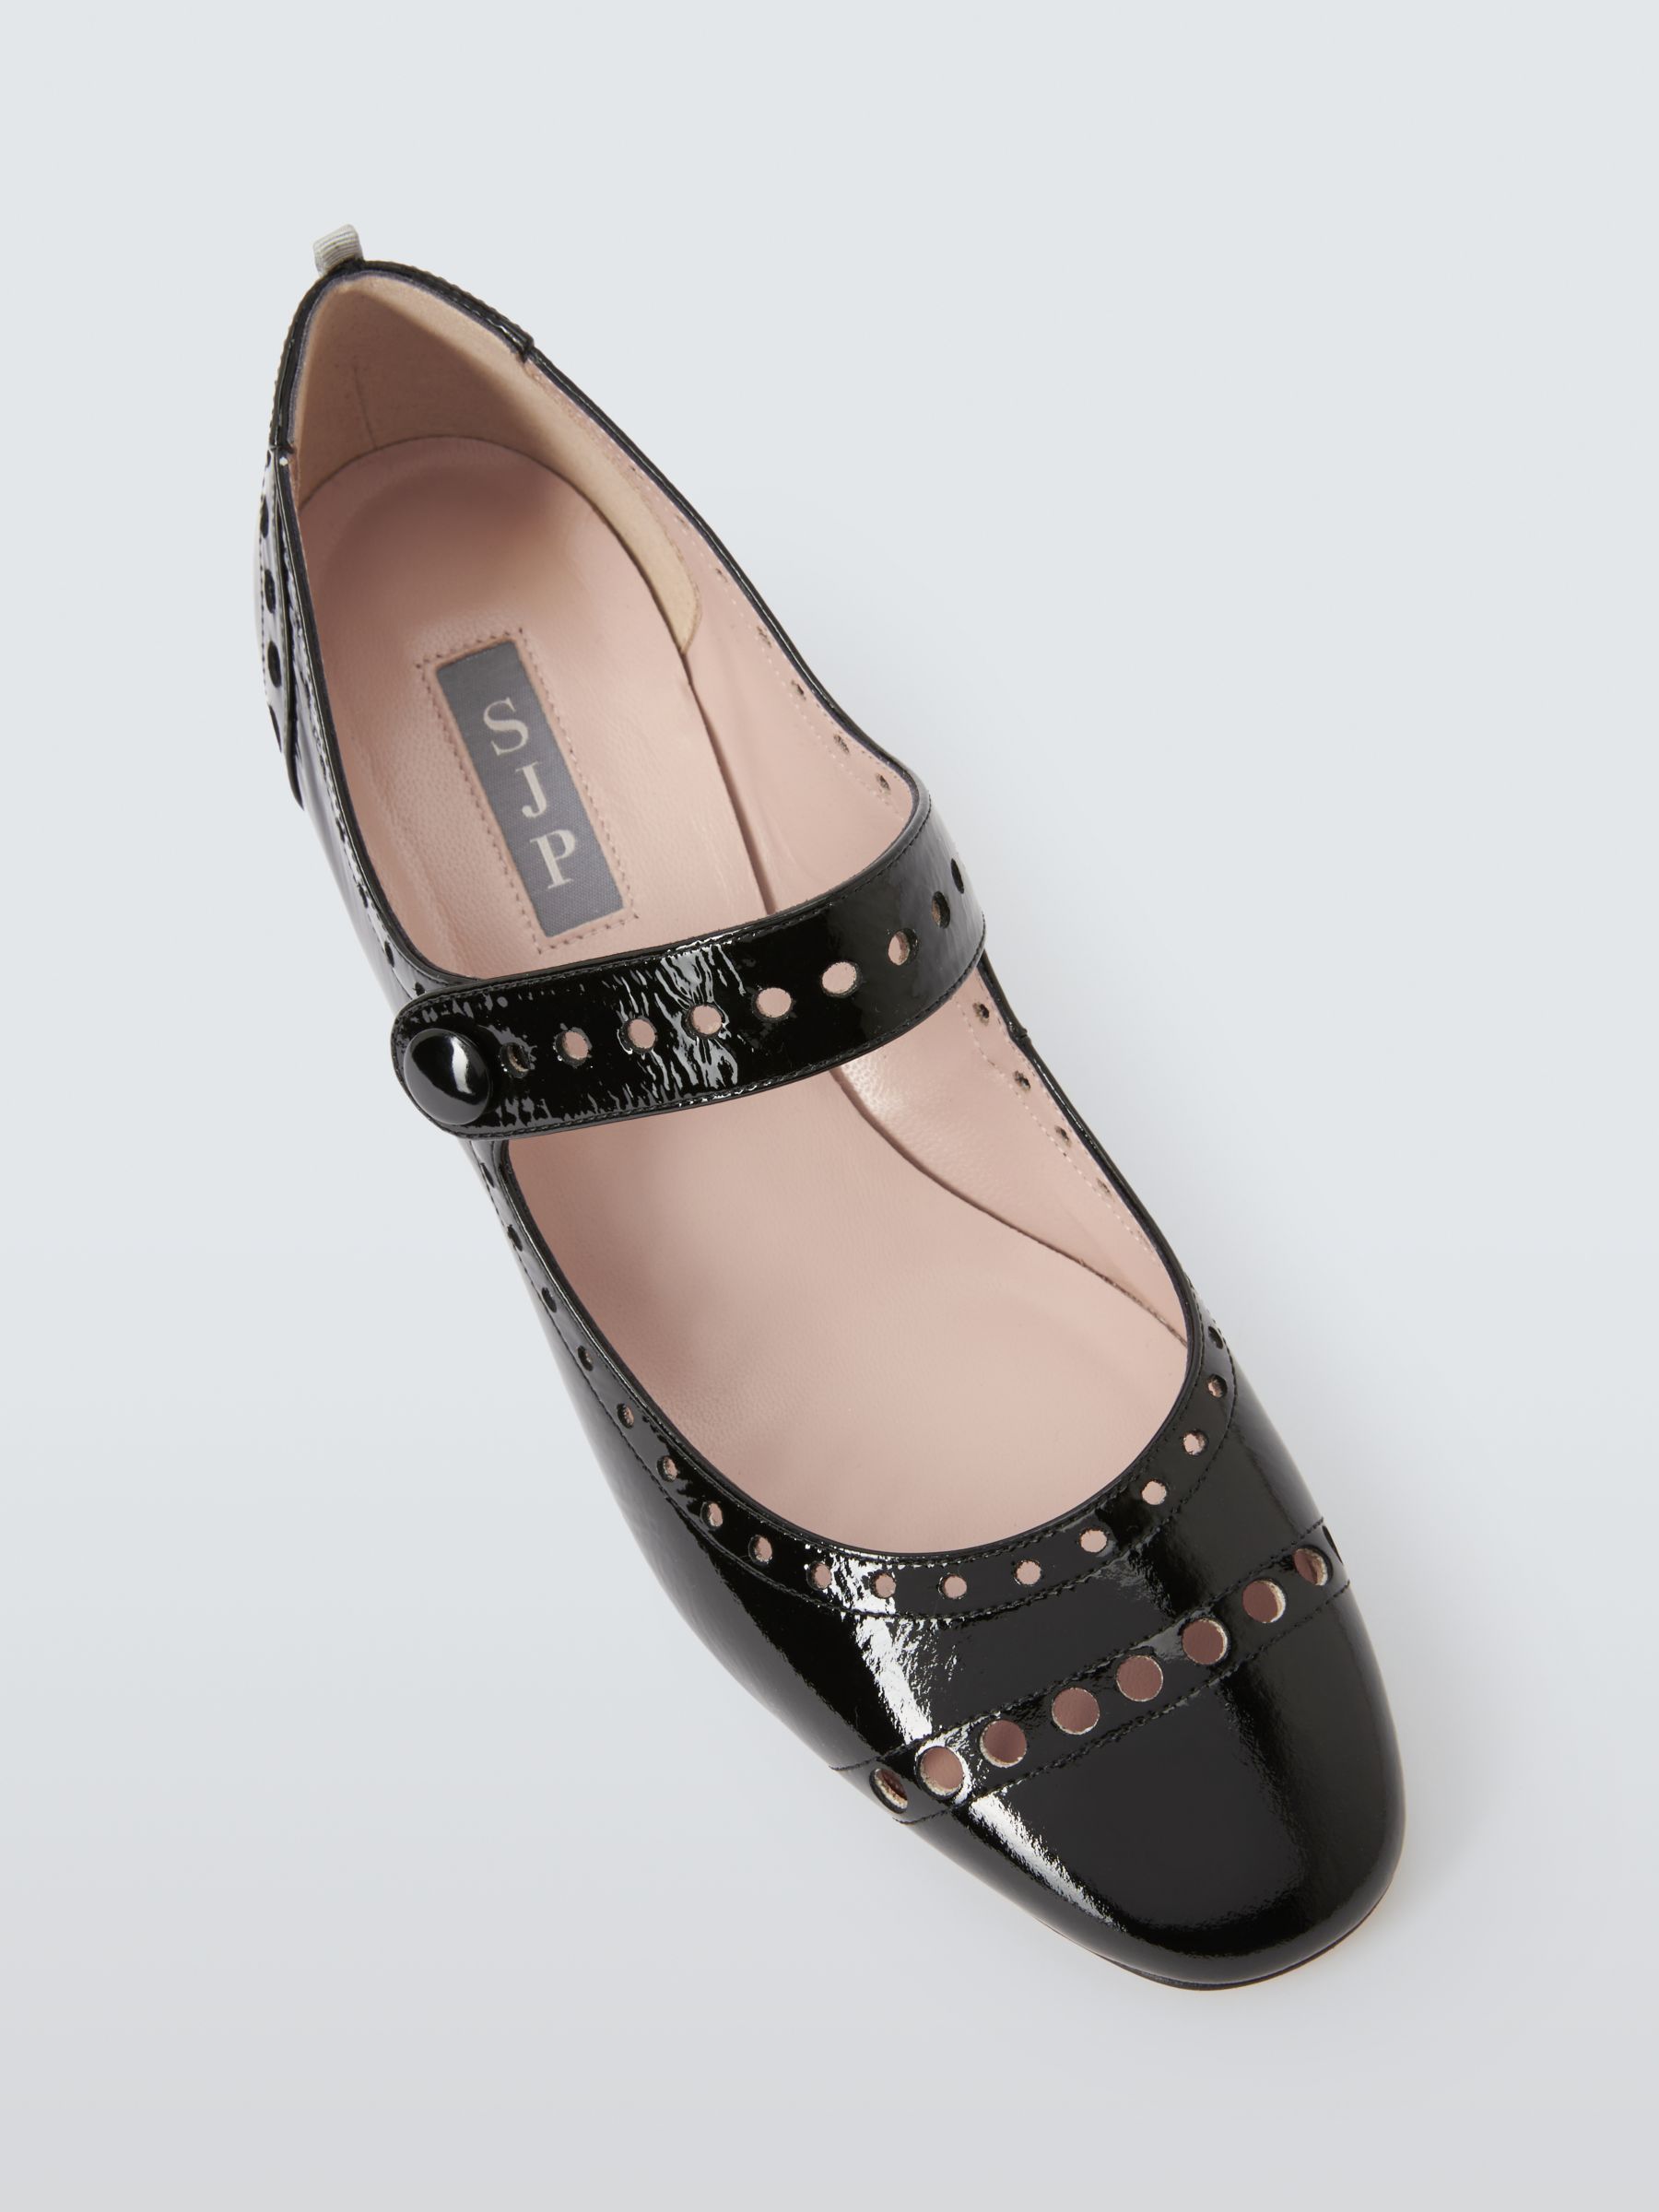 SJP by Sarah Jessica Parker Tartt Patent Leather Mary Jane Shoes, Black, 6